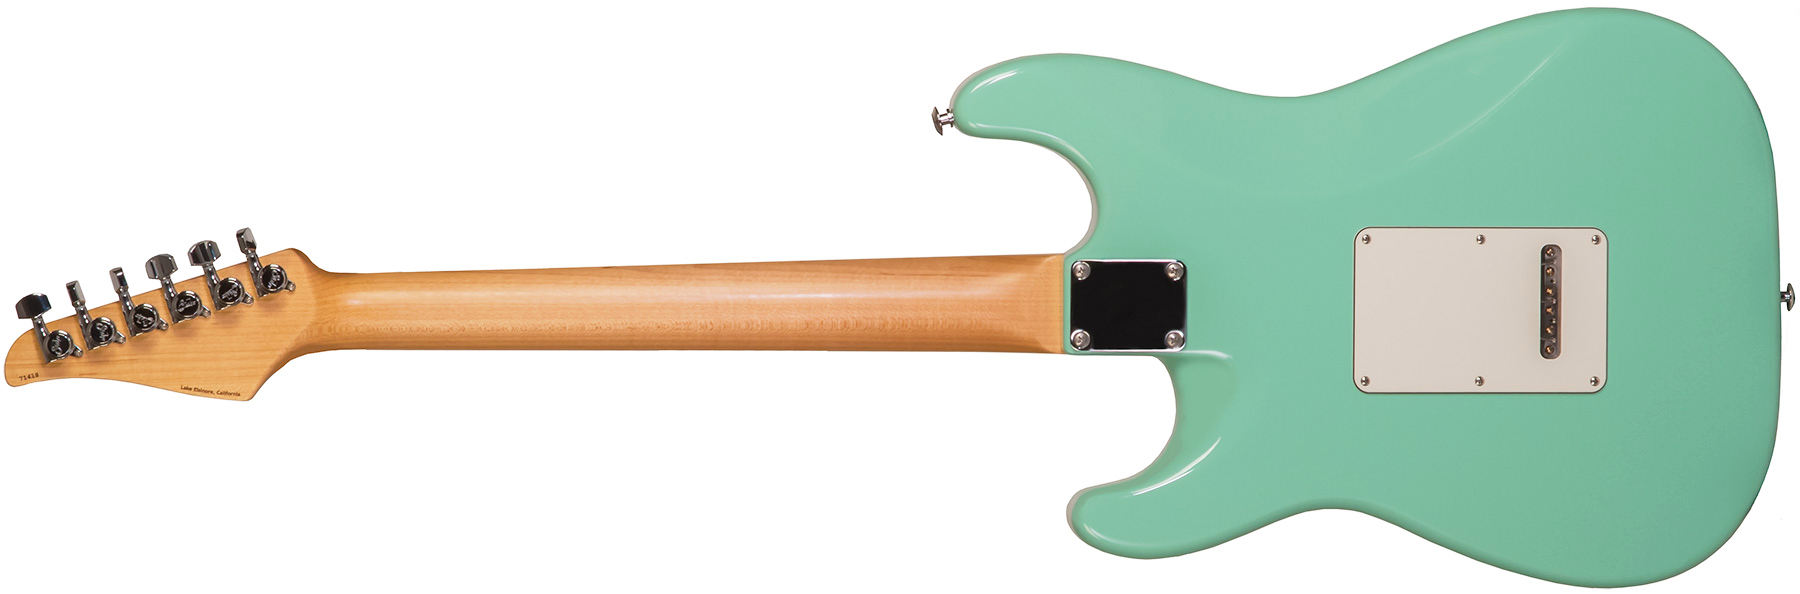 Suhr Classic S Antique Sss 01-csa-0020 3s Trem Mn #71418 - Light Aging Surf Green - Elektrische gitaar in Str-vorm - Variation 1